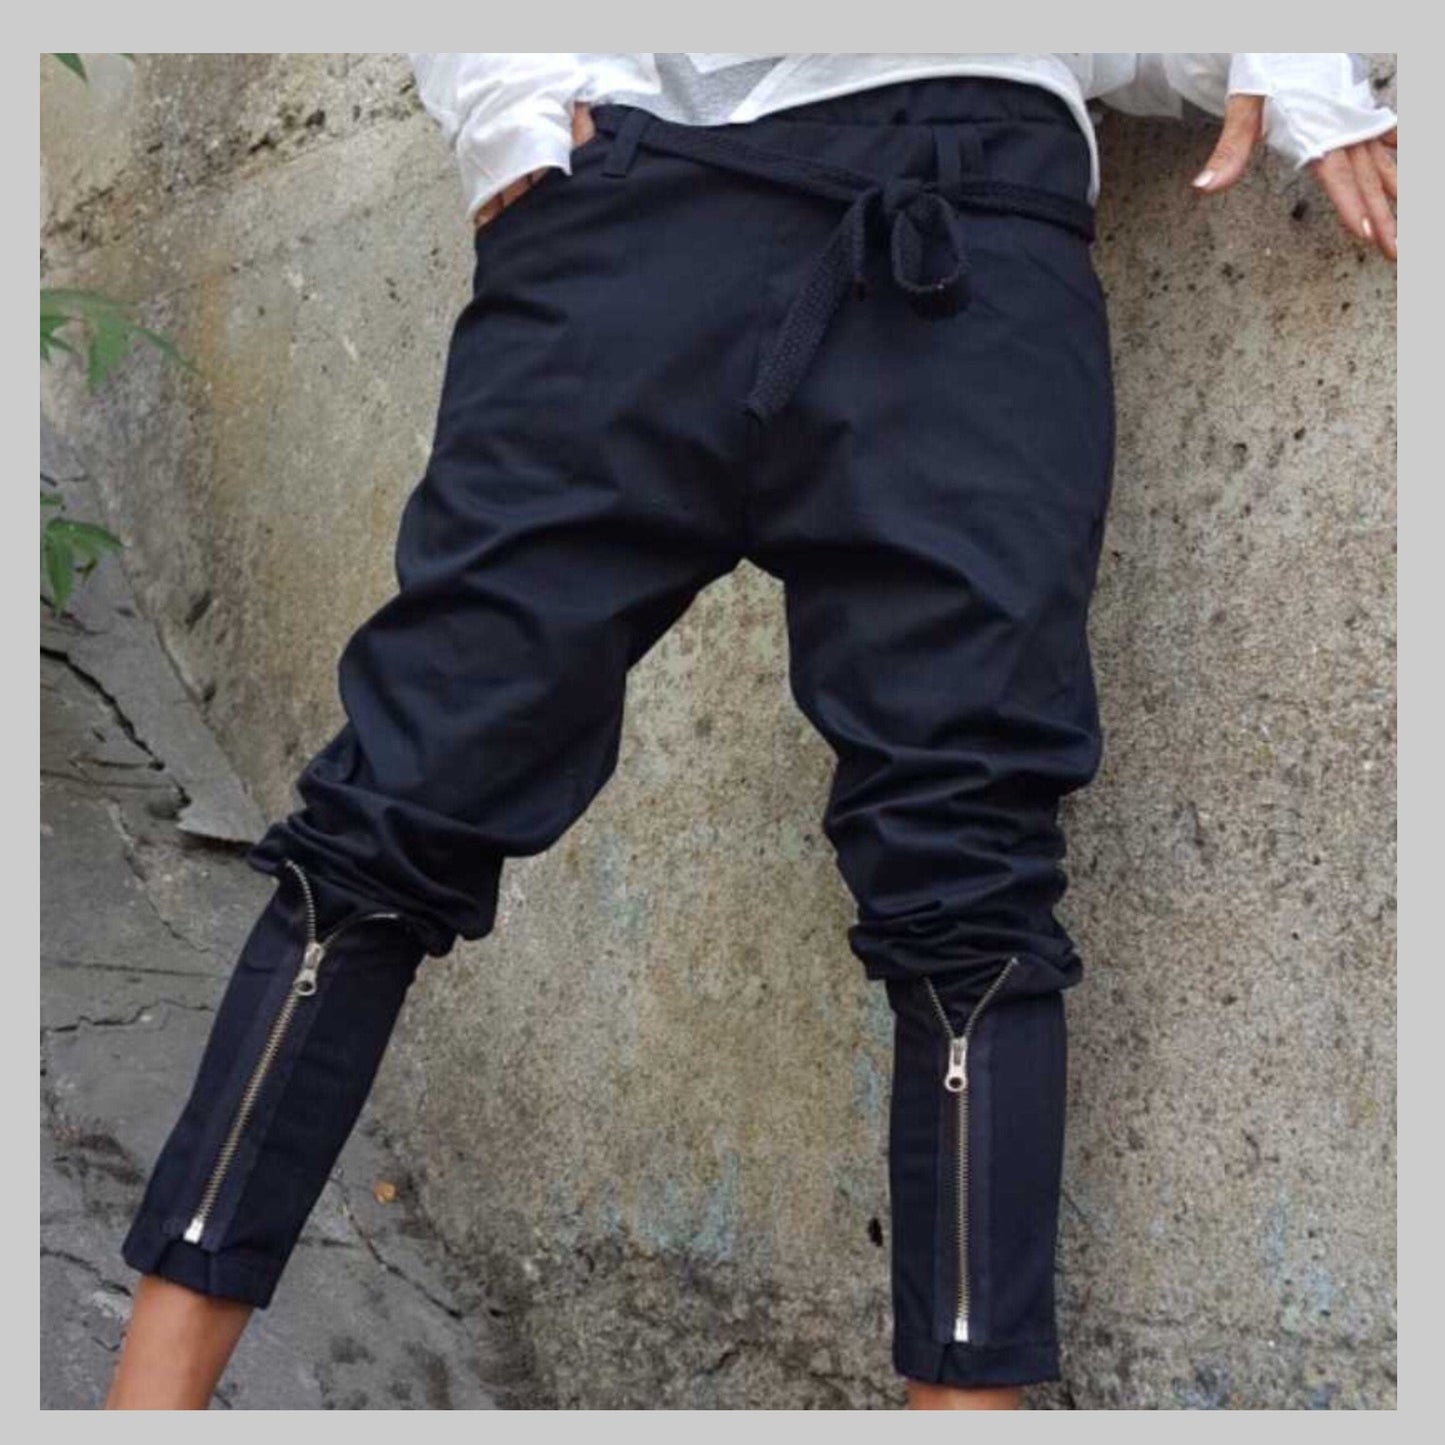 Urban Women Black Pants - Handmade clothing from AngelBySilvia - Top Designer Brands 